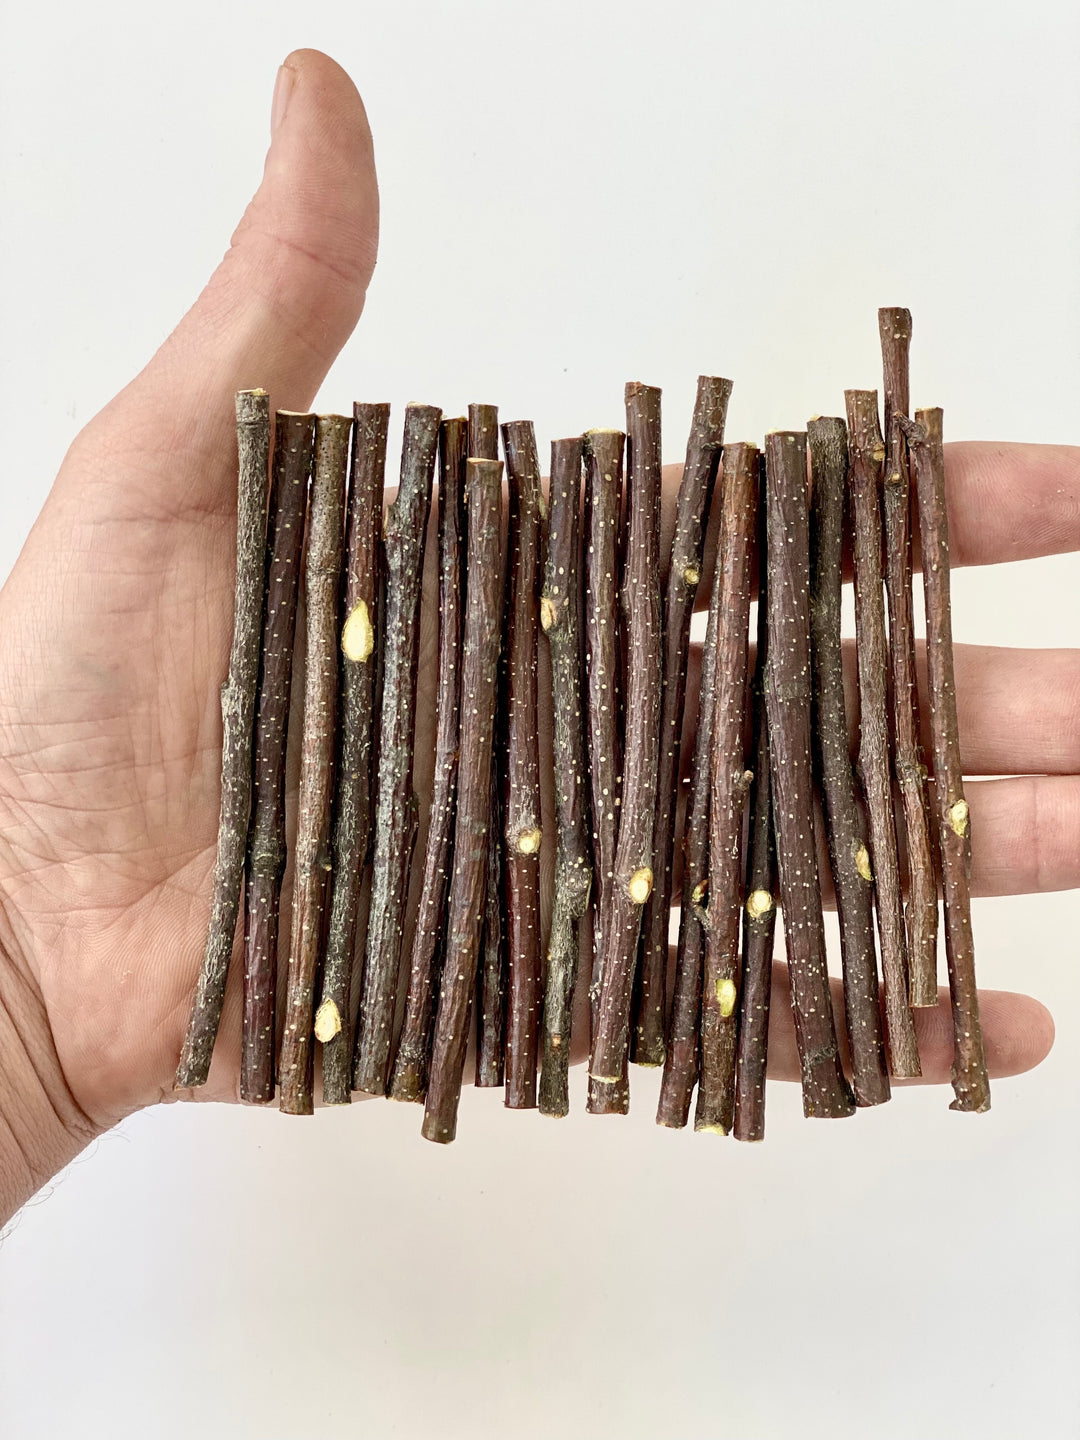 300g Ecovenik Wood Sticks for Crafts - 6 Inch - Birch Wood Craft